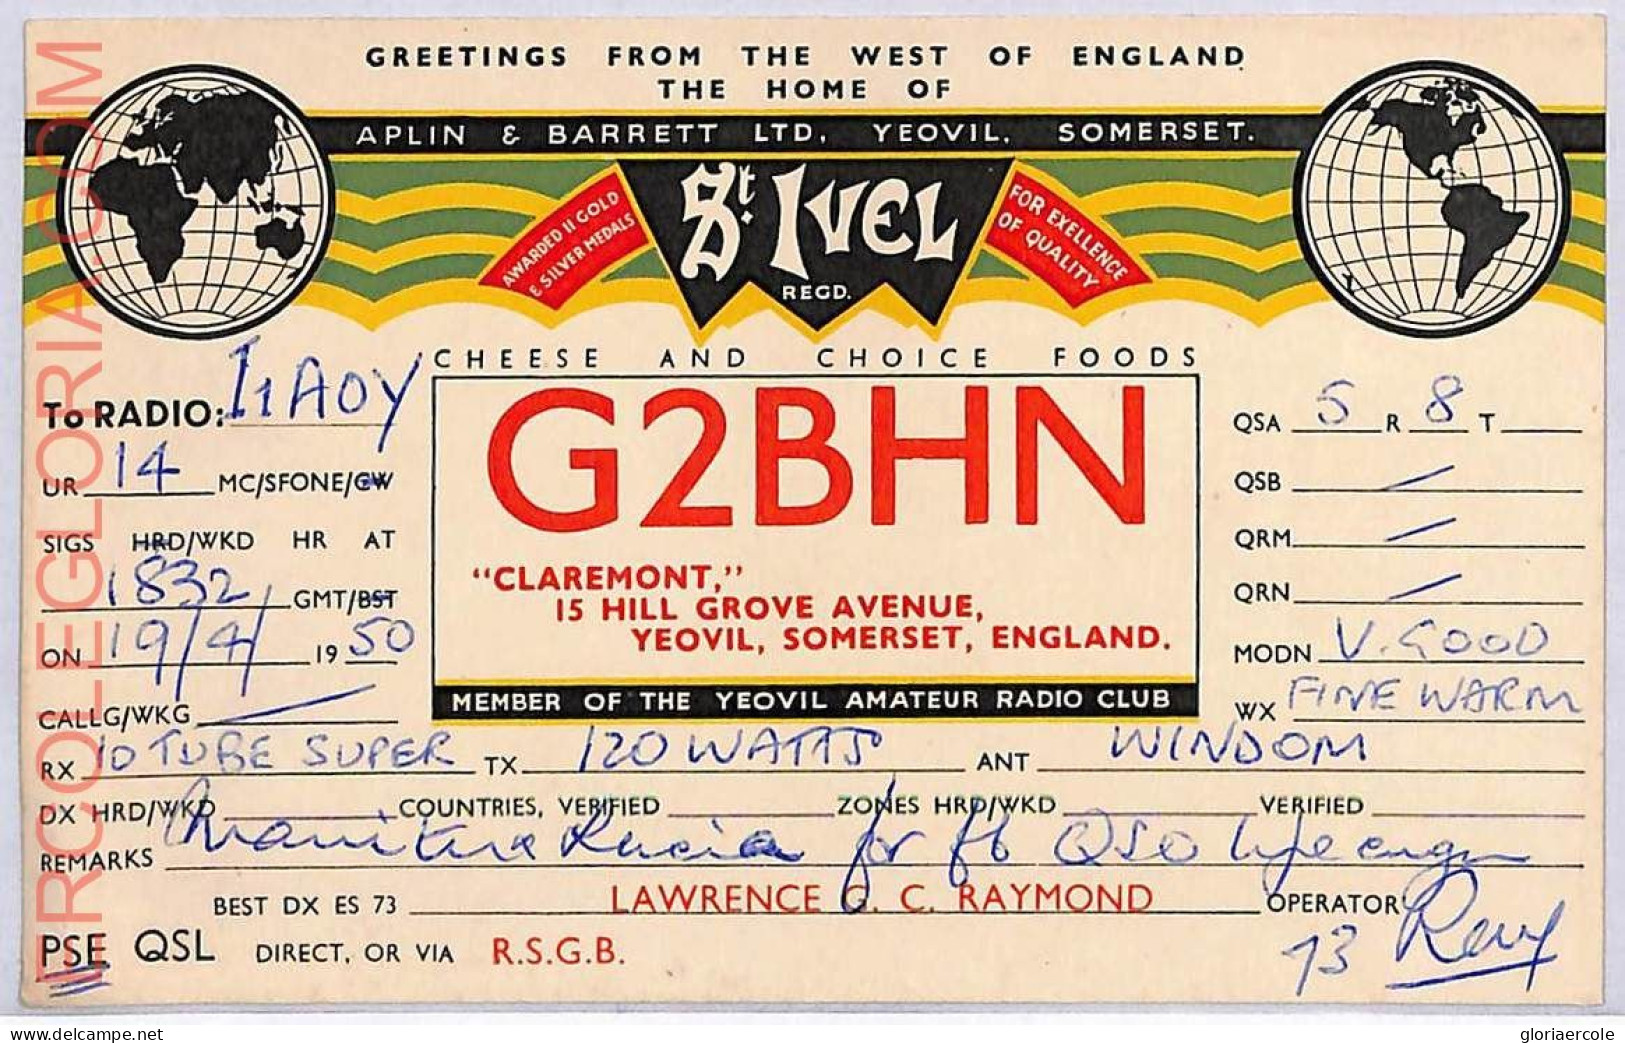 Ad9081 - GREAT BRITAIN - RADIO FREQUENCY CARD - England - 1950 - Radio